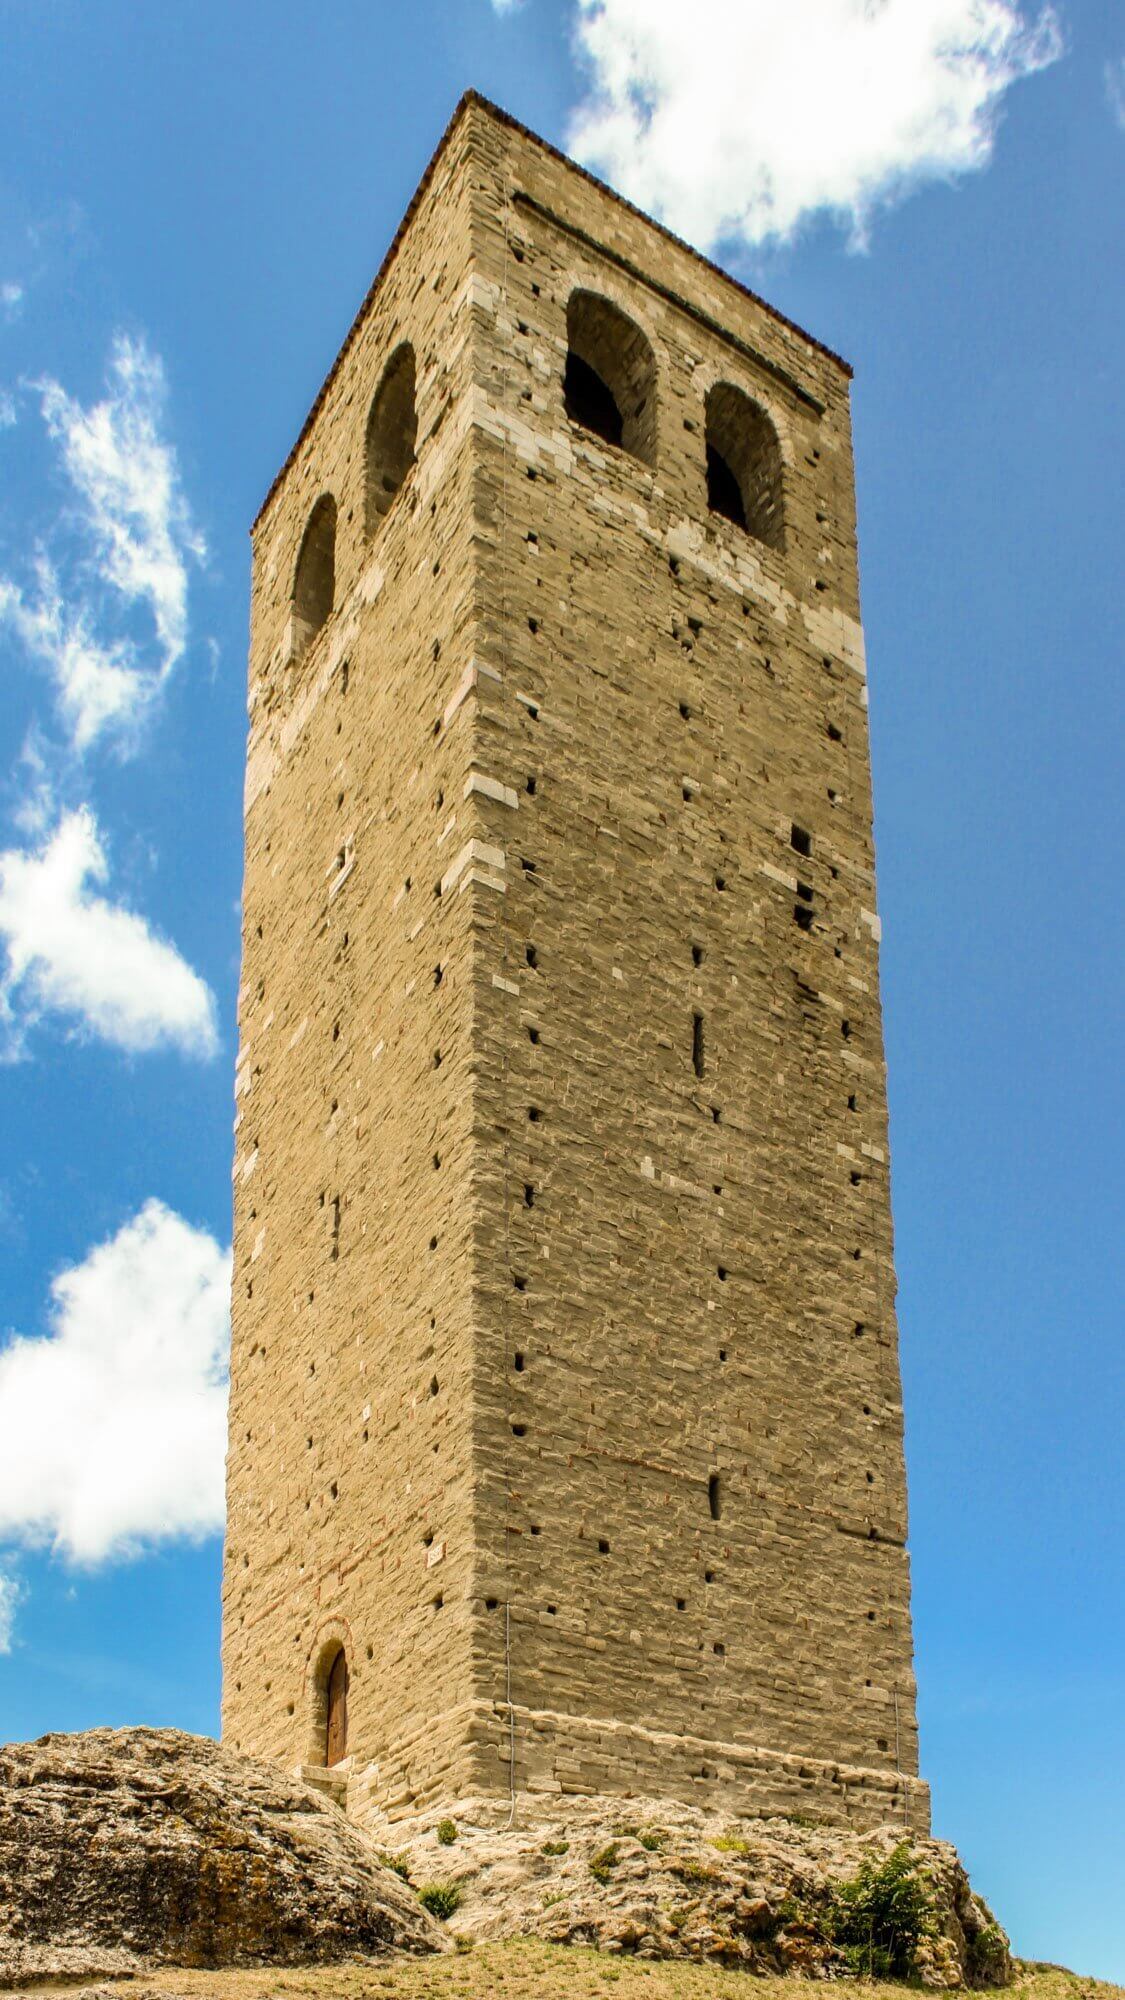 The Romanesque defensive watchtower in San Leo